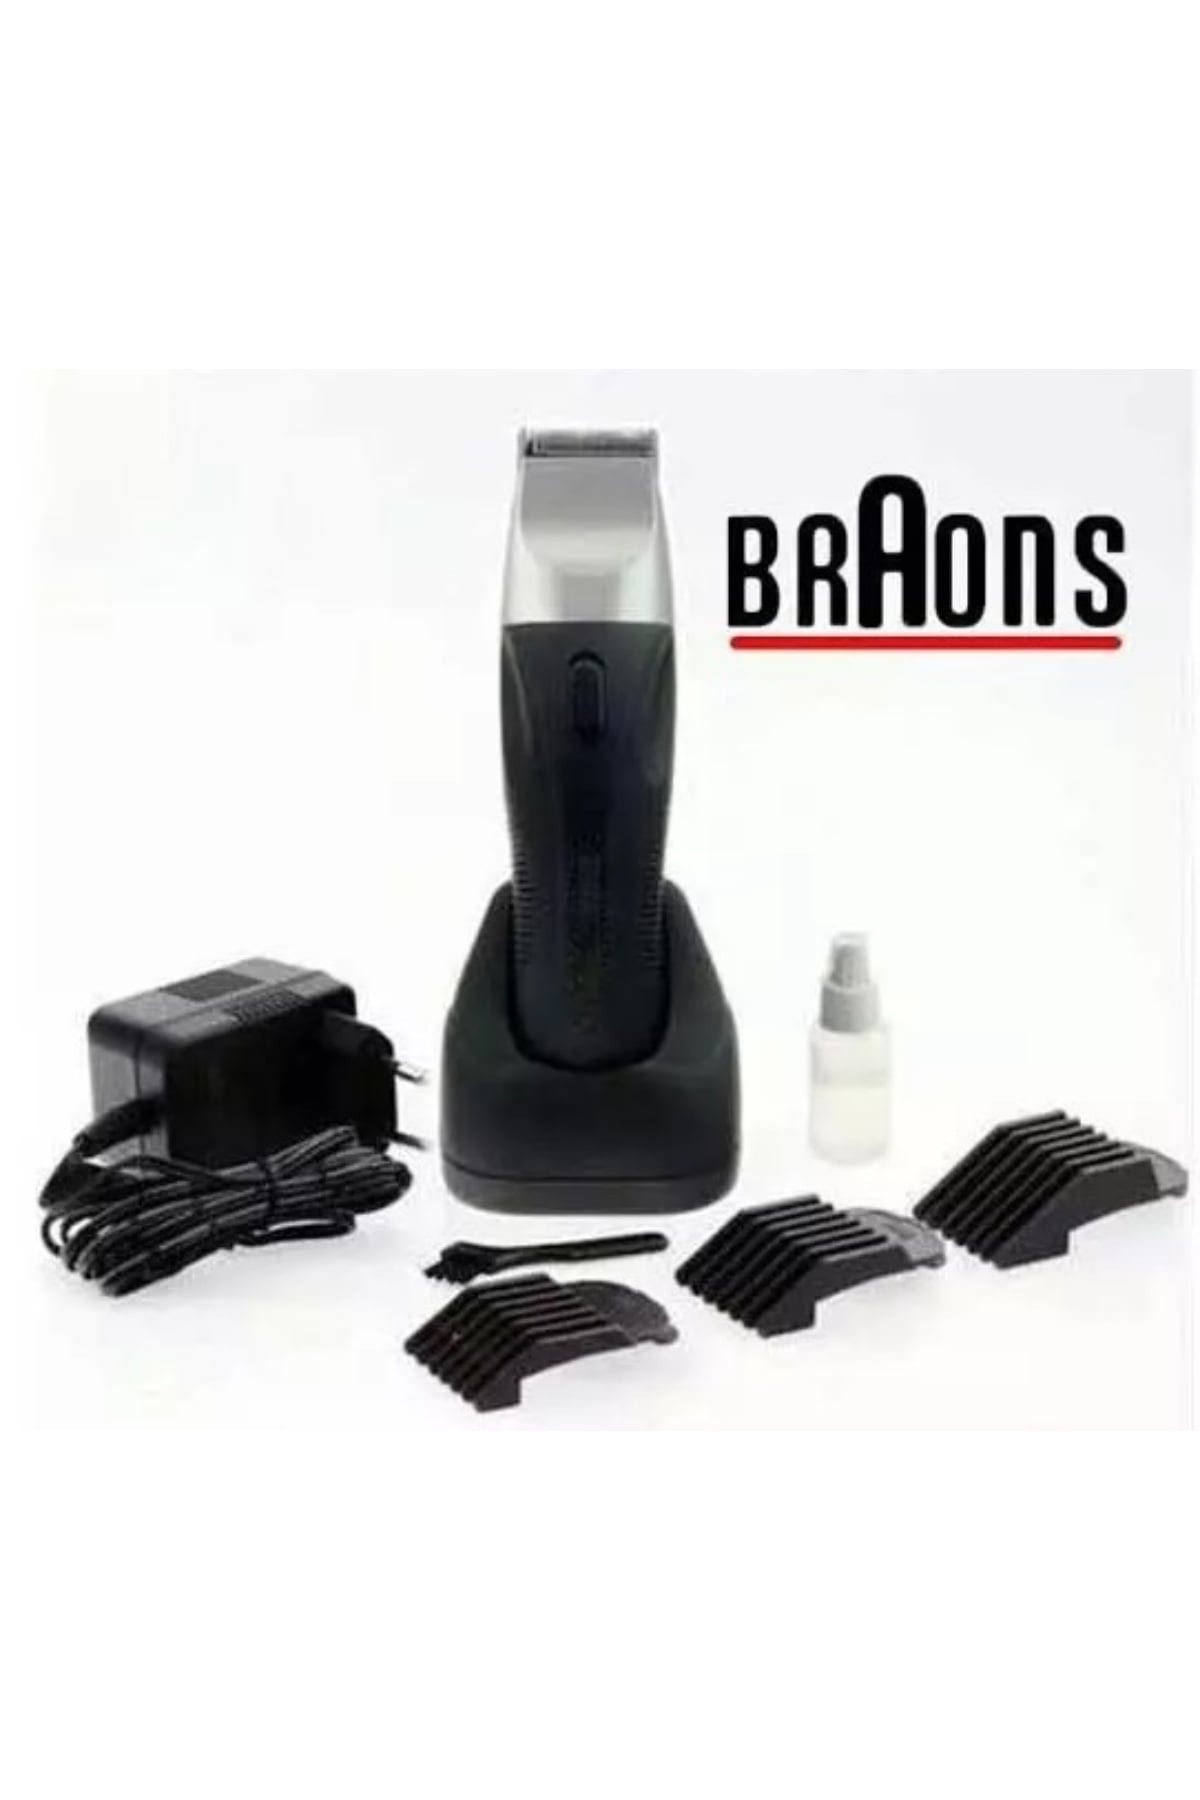 Braons Brs-128 Saç Sakal Kesme Makinesi*20 - 11-0608 - 2345